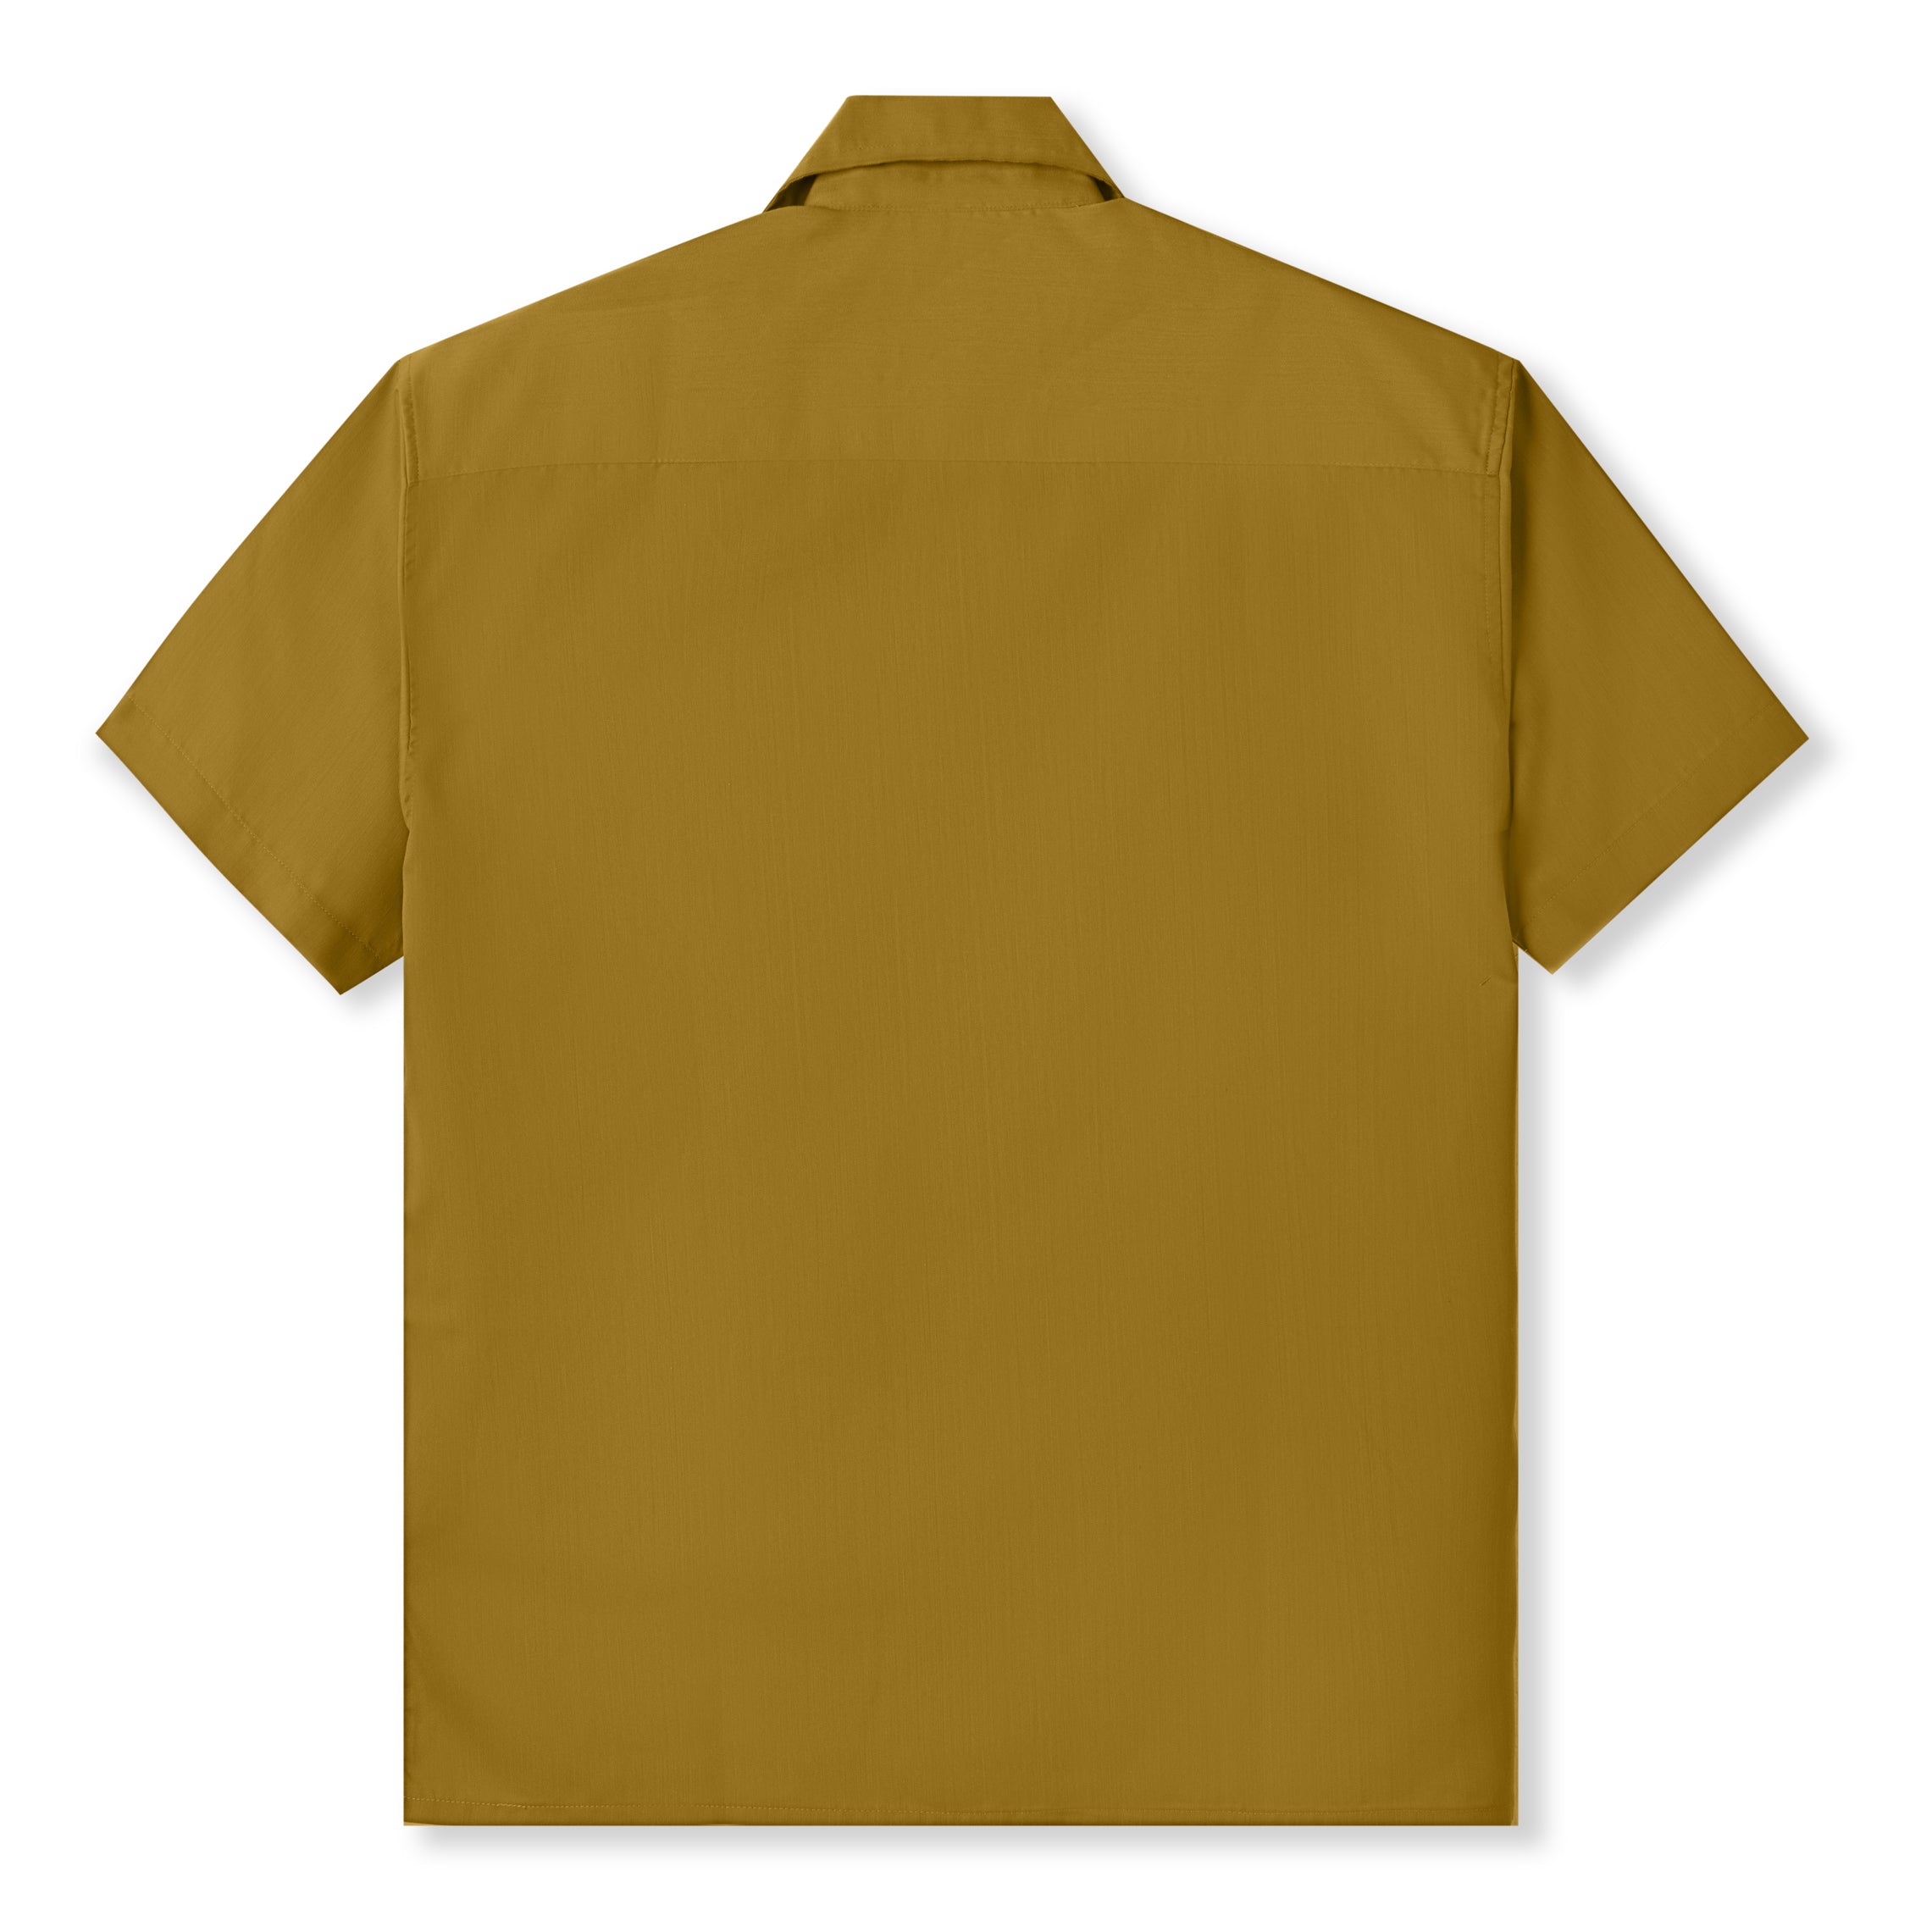 The Prep Shirt - Dark Mustard